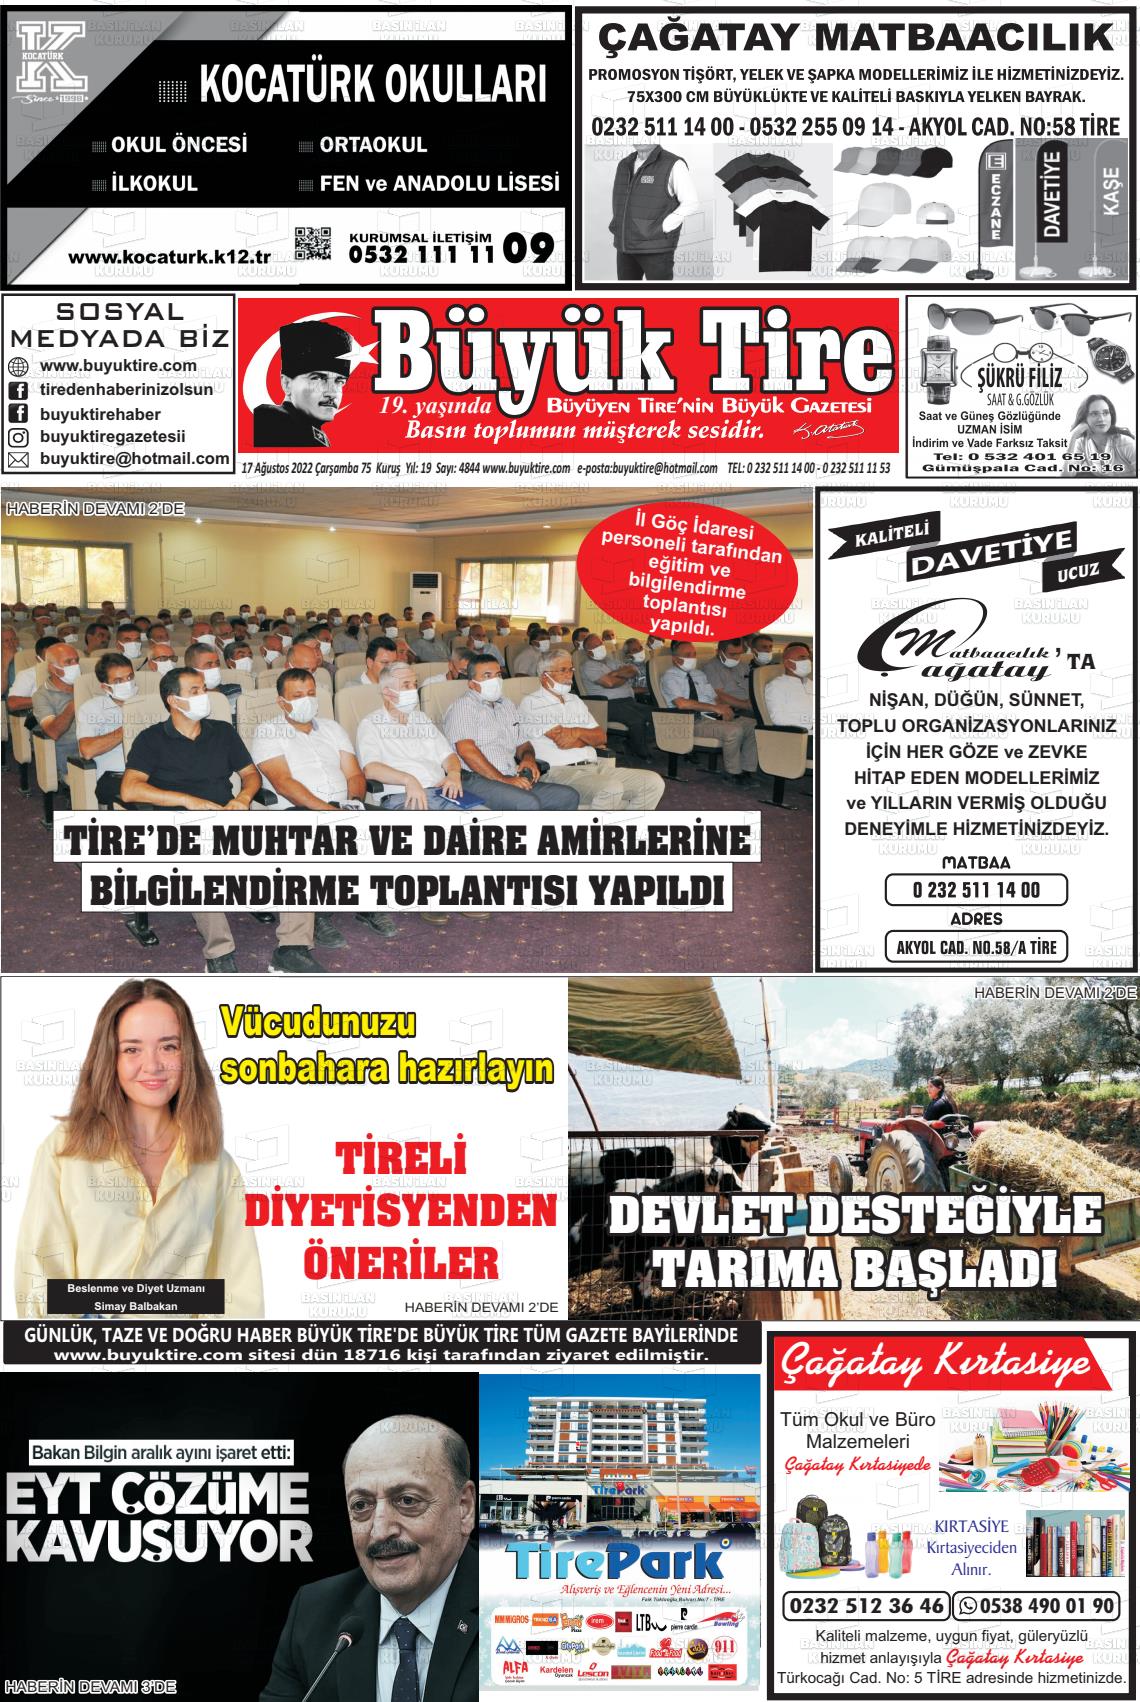 17 Ağustos 2022 Büyük Tire Gazete Manşeti